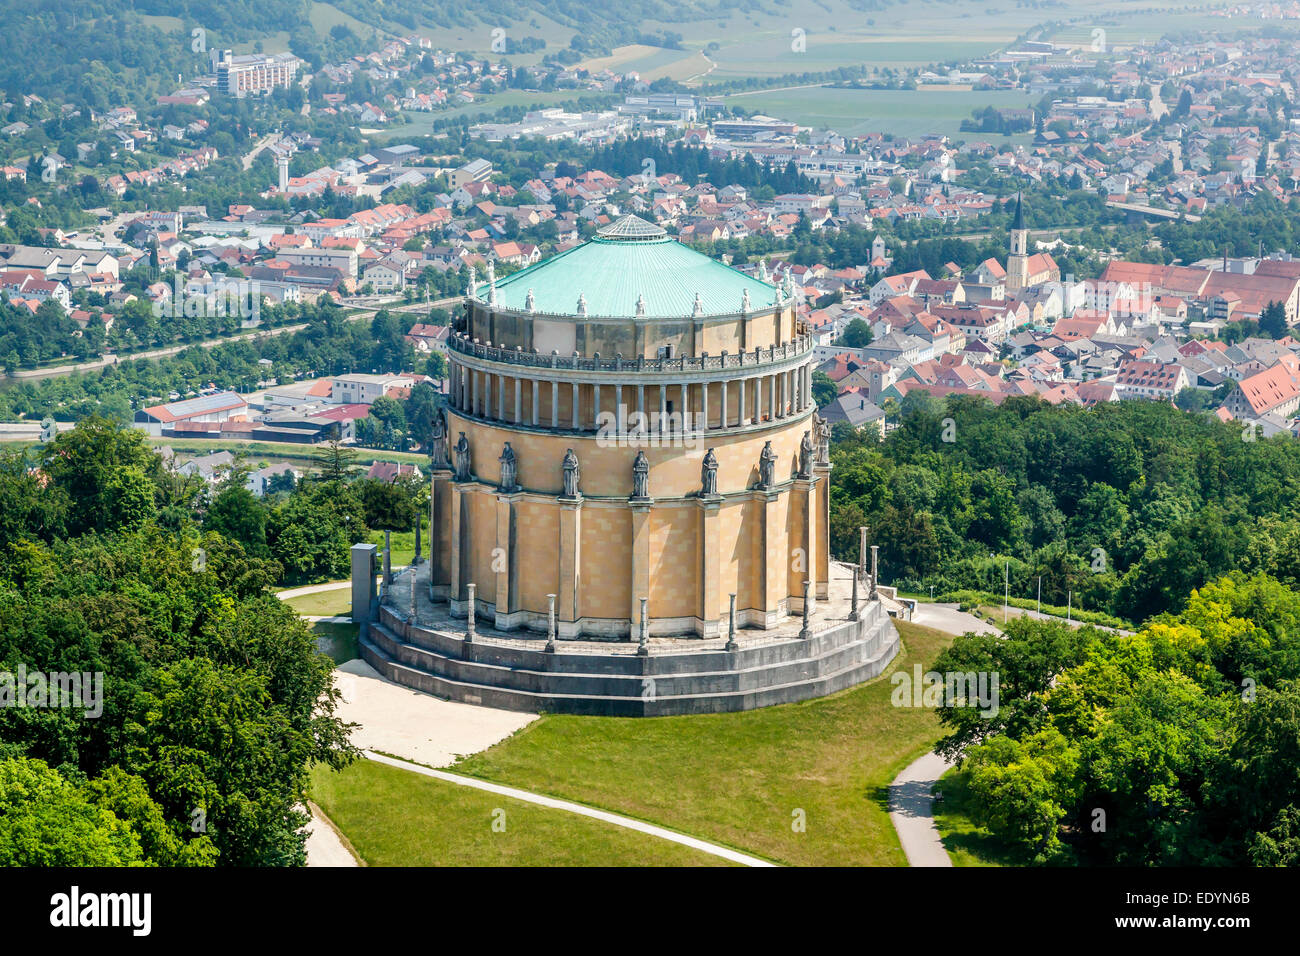 Aerial view, Befreiungshalle or Hall of Liberation, Kelheim, Bavaria, Germany Stock Photo